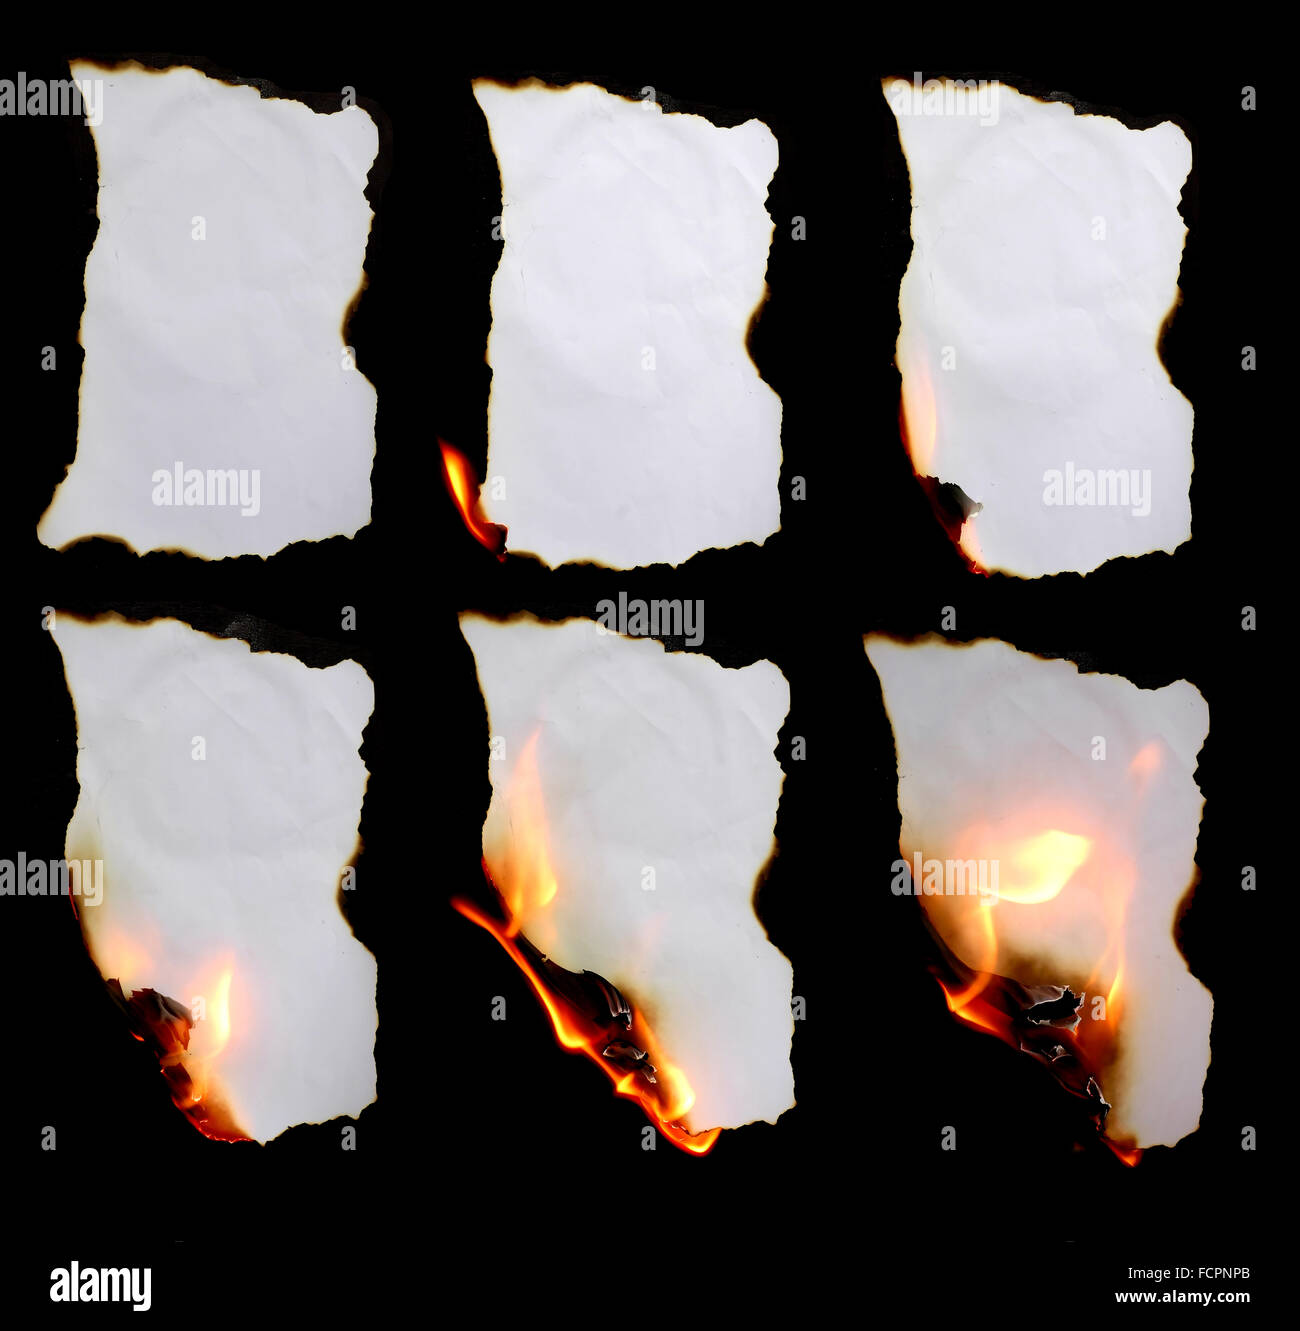 burning paper in dark background Stock Photo